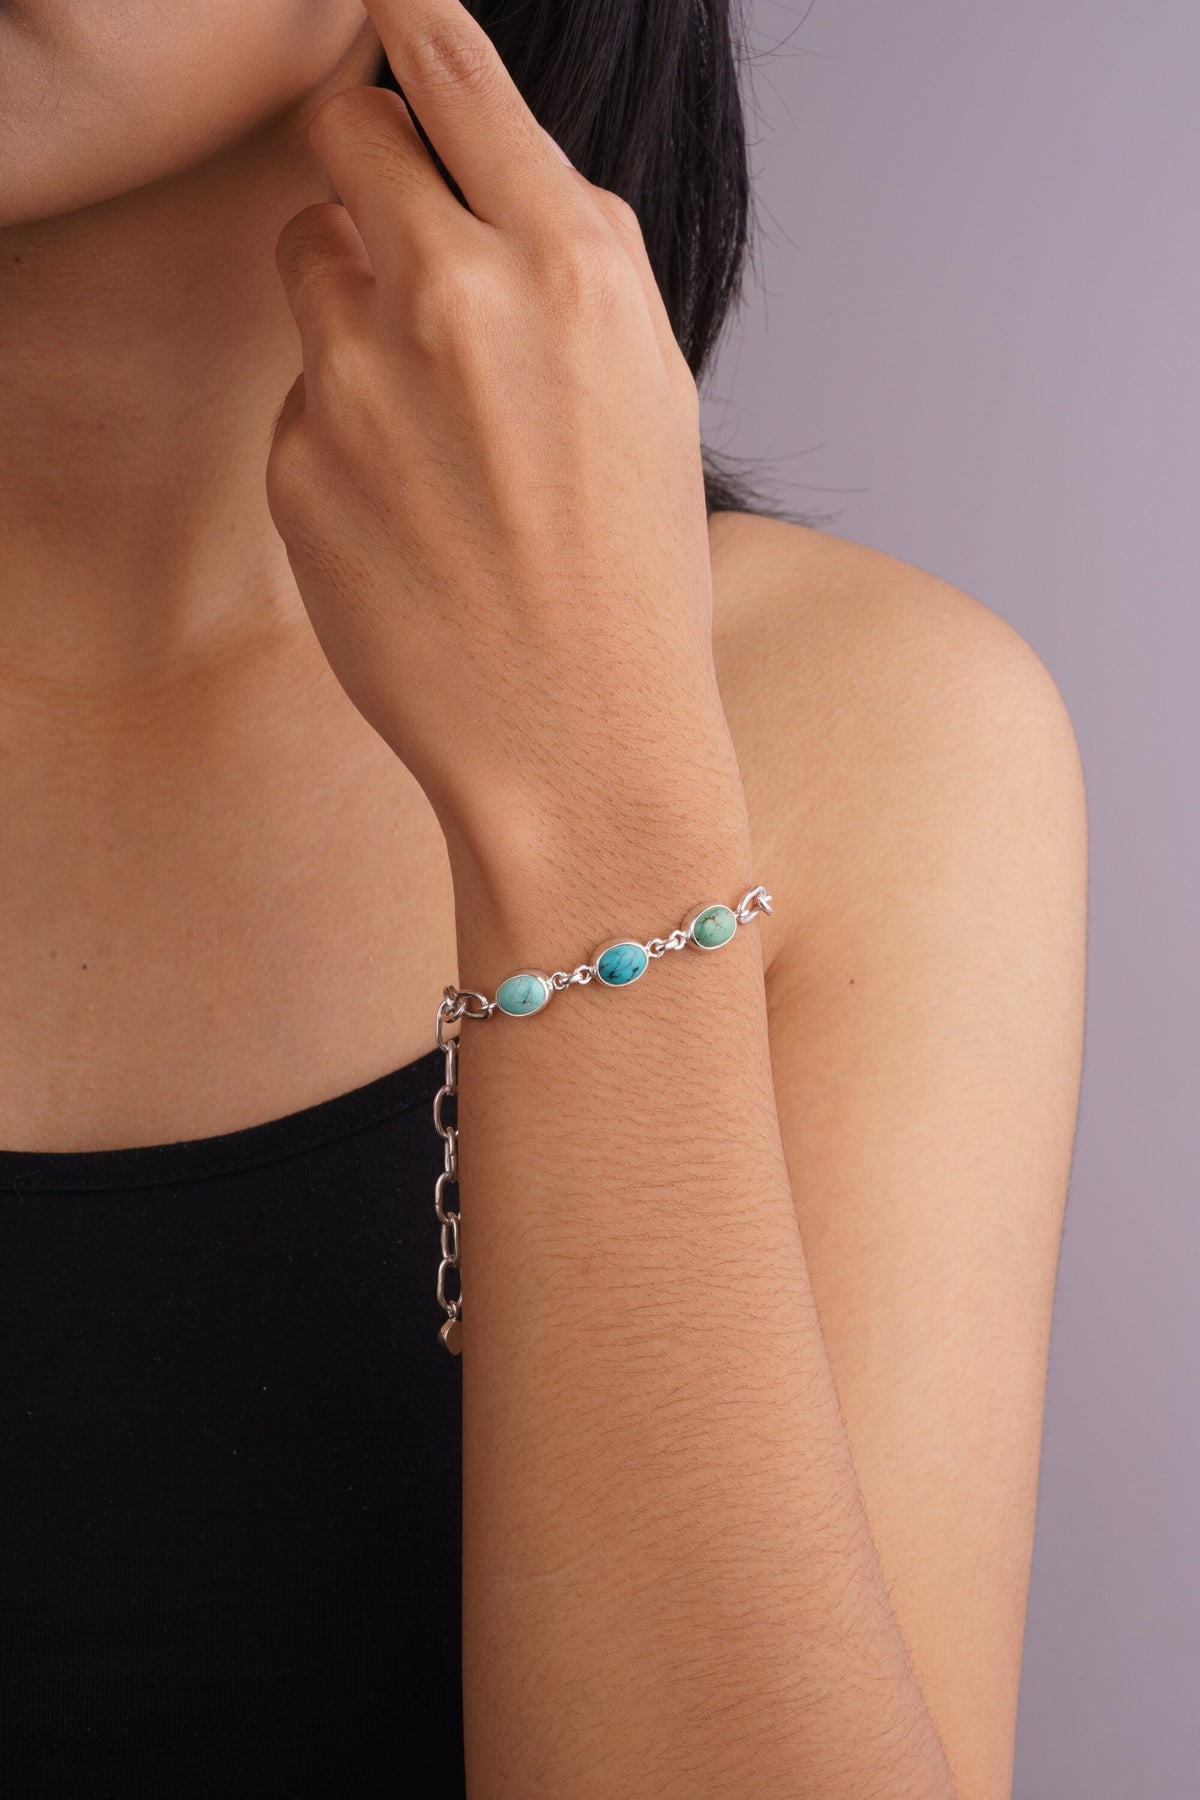 Turquoise Cascade Elegance Bracelet: Three Turquoise & Herkimer Diamond - Sterling Silver - Shiny and Polish Finish